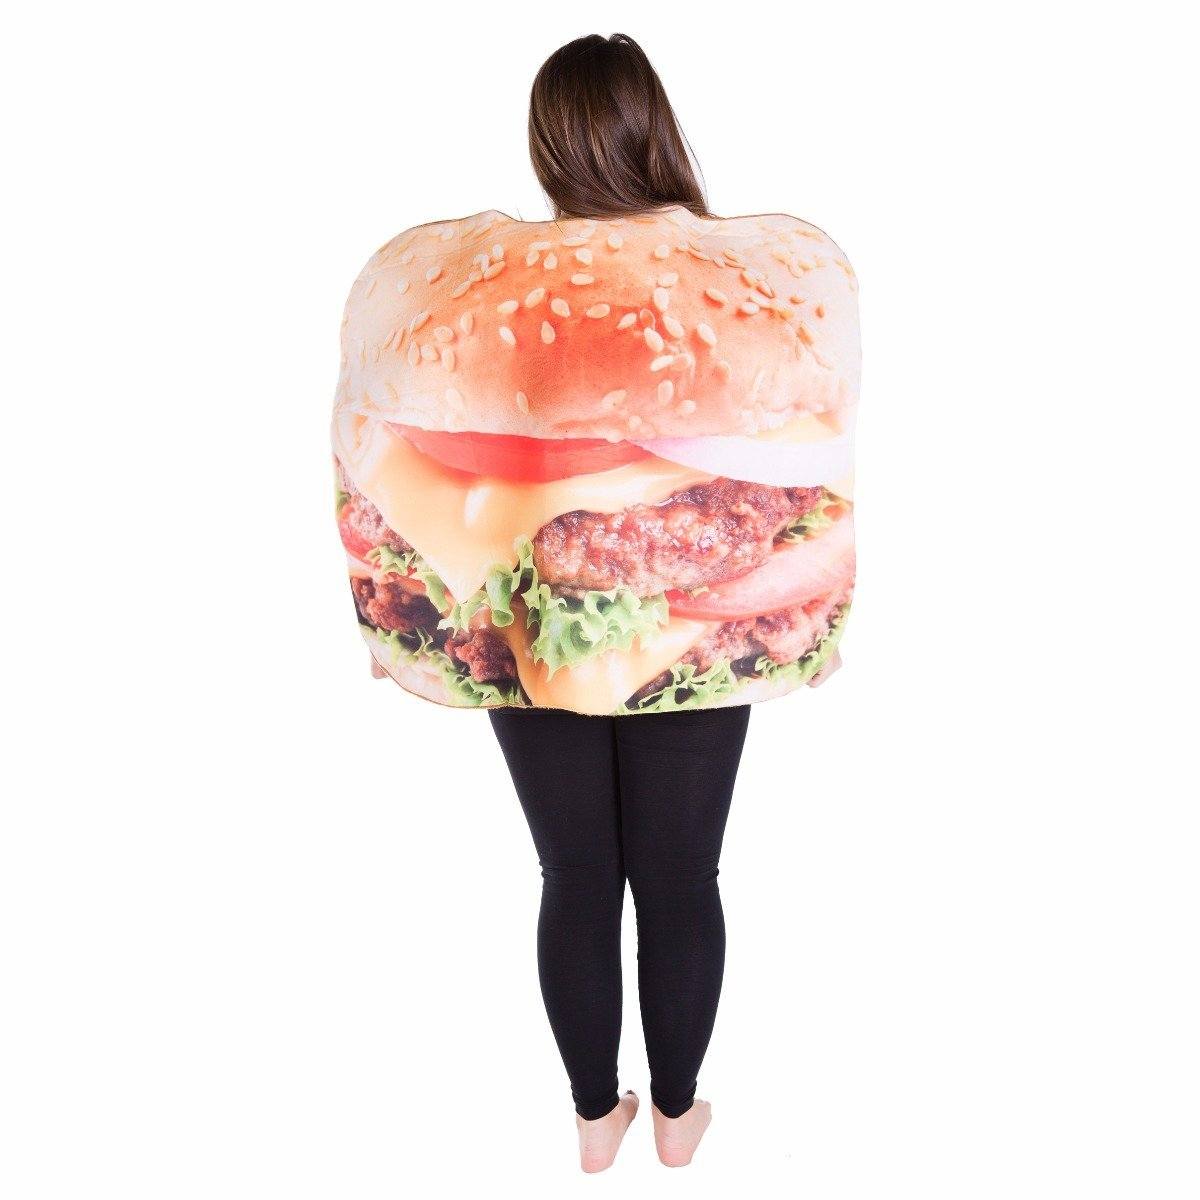 Fancy Dress - Burger Costume